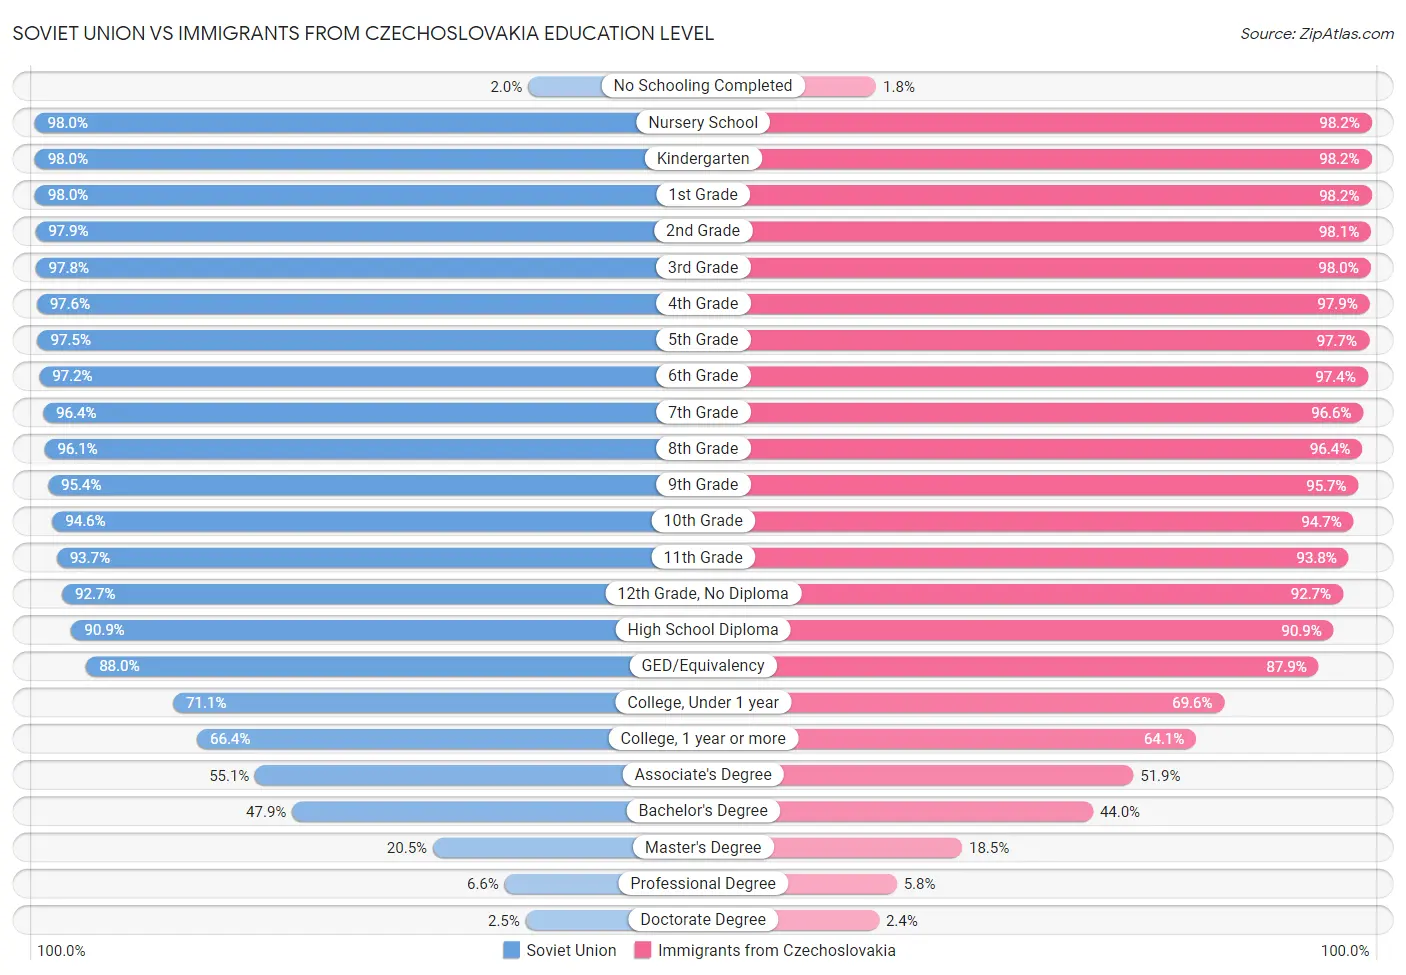 Soviet Union vs Immigrants from Czechoslovakia Education Level